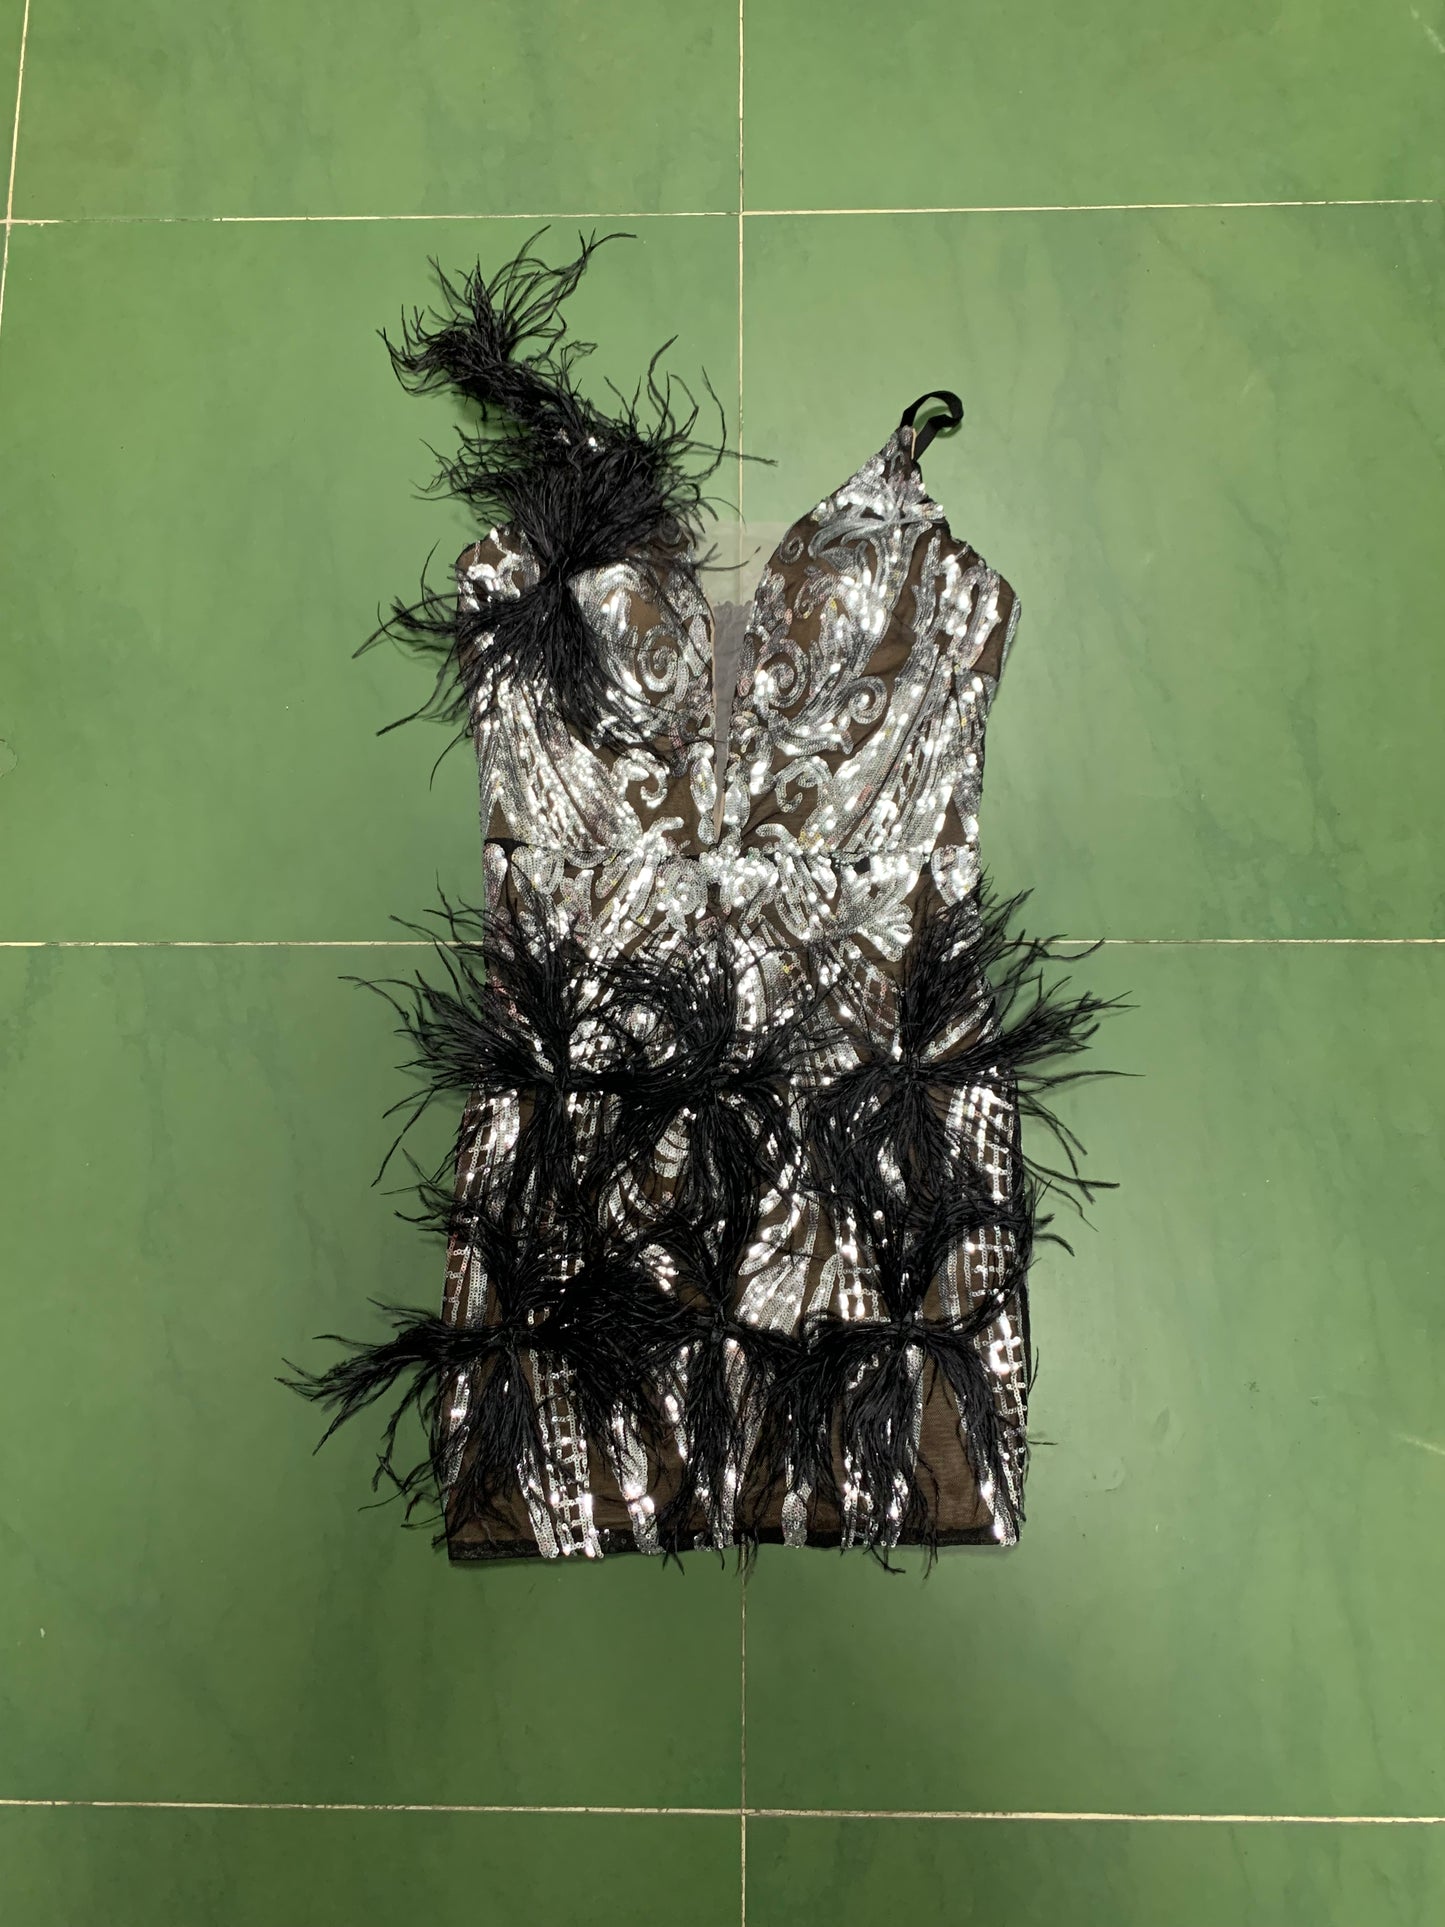 Black Feathers Sequin Mini Dress